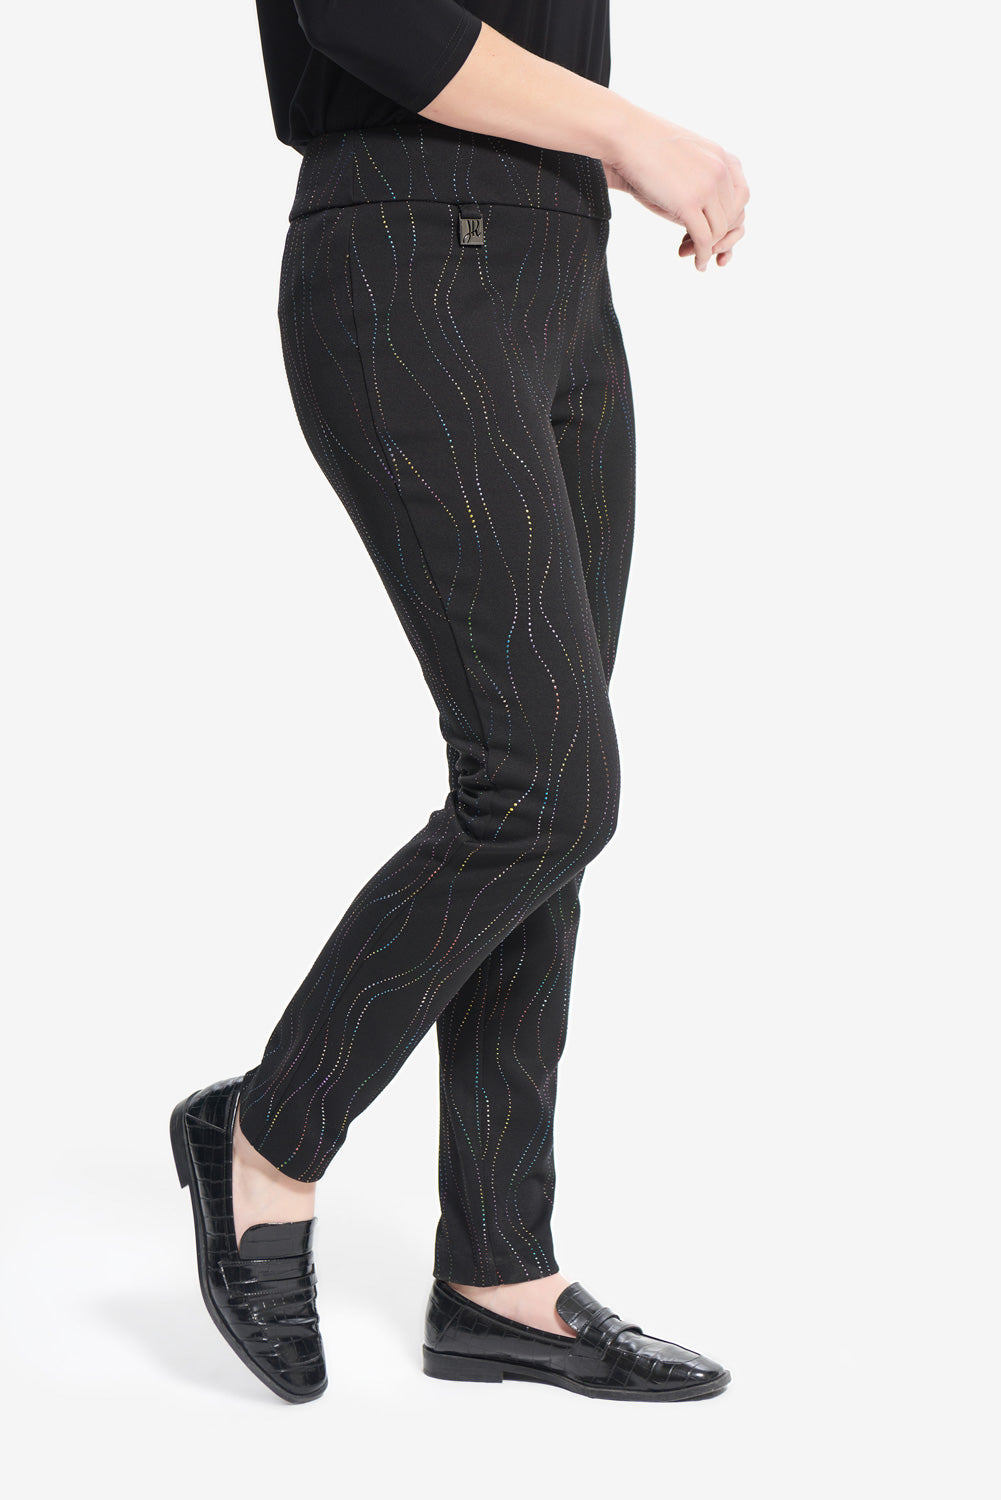 Joseph Ribkoff Black-Multi Embellished Pants Style 214297